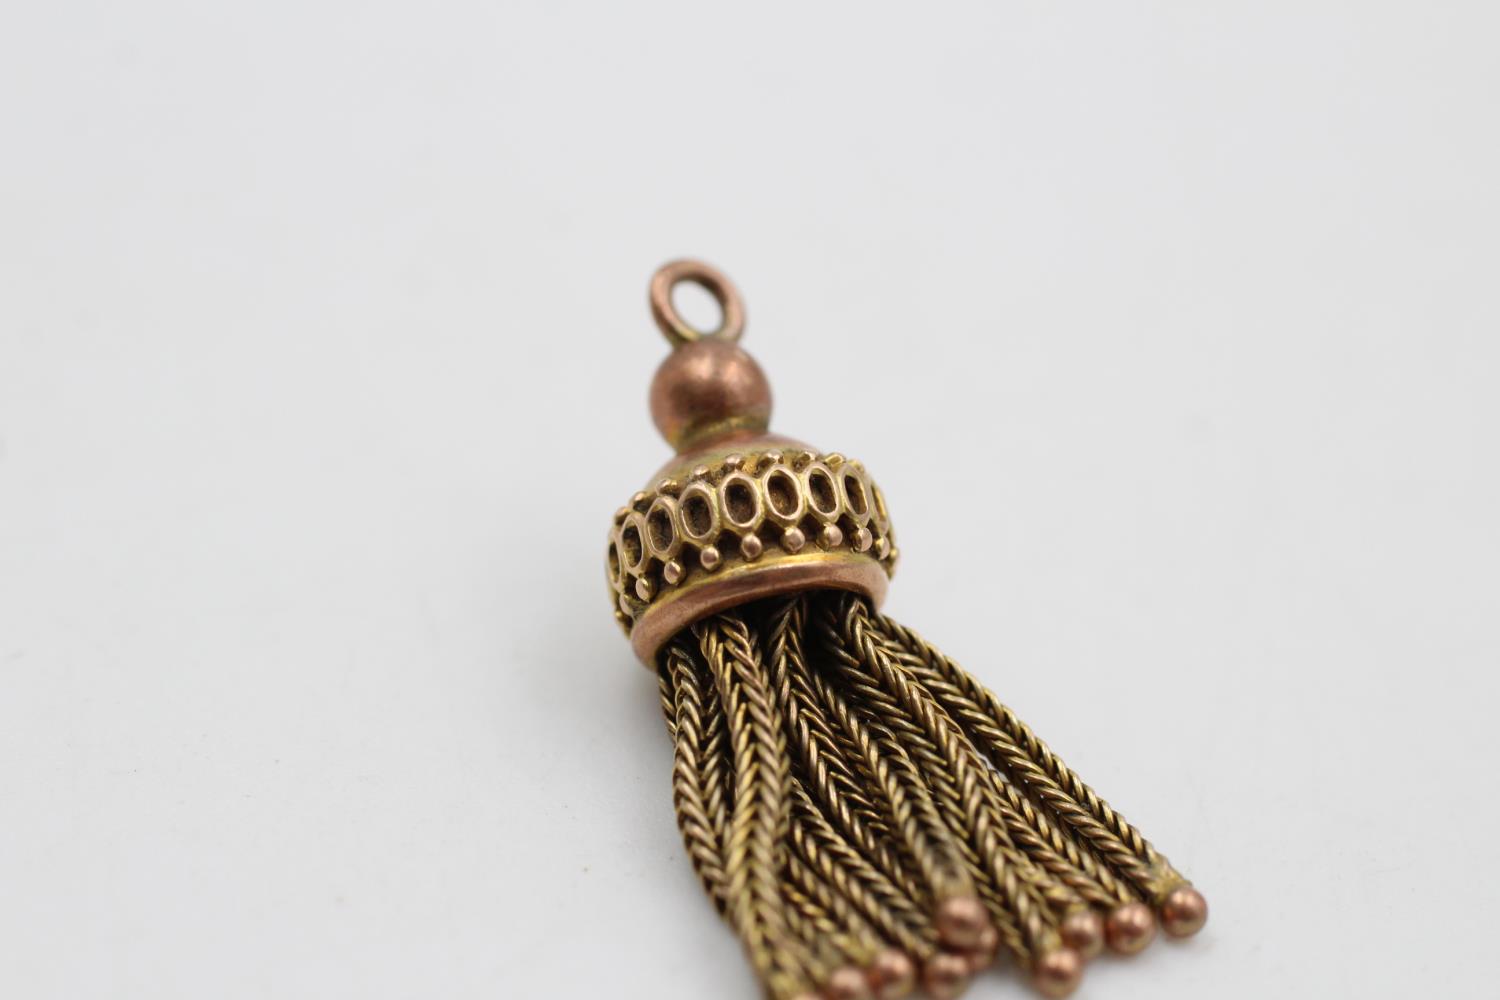 10ct gold antique tassel pendant charm 2.9 grams gross - Image 3 of 4